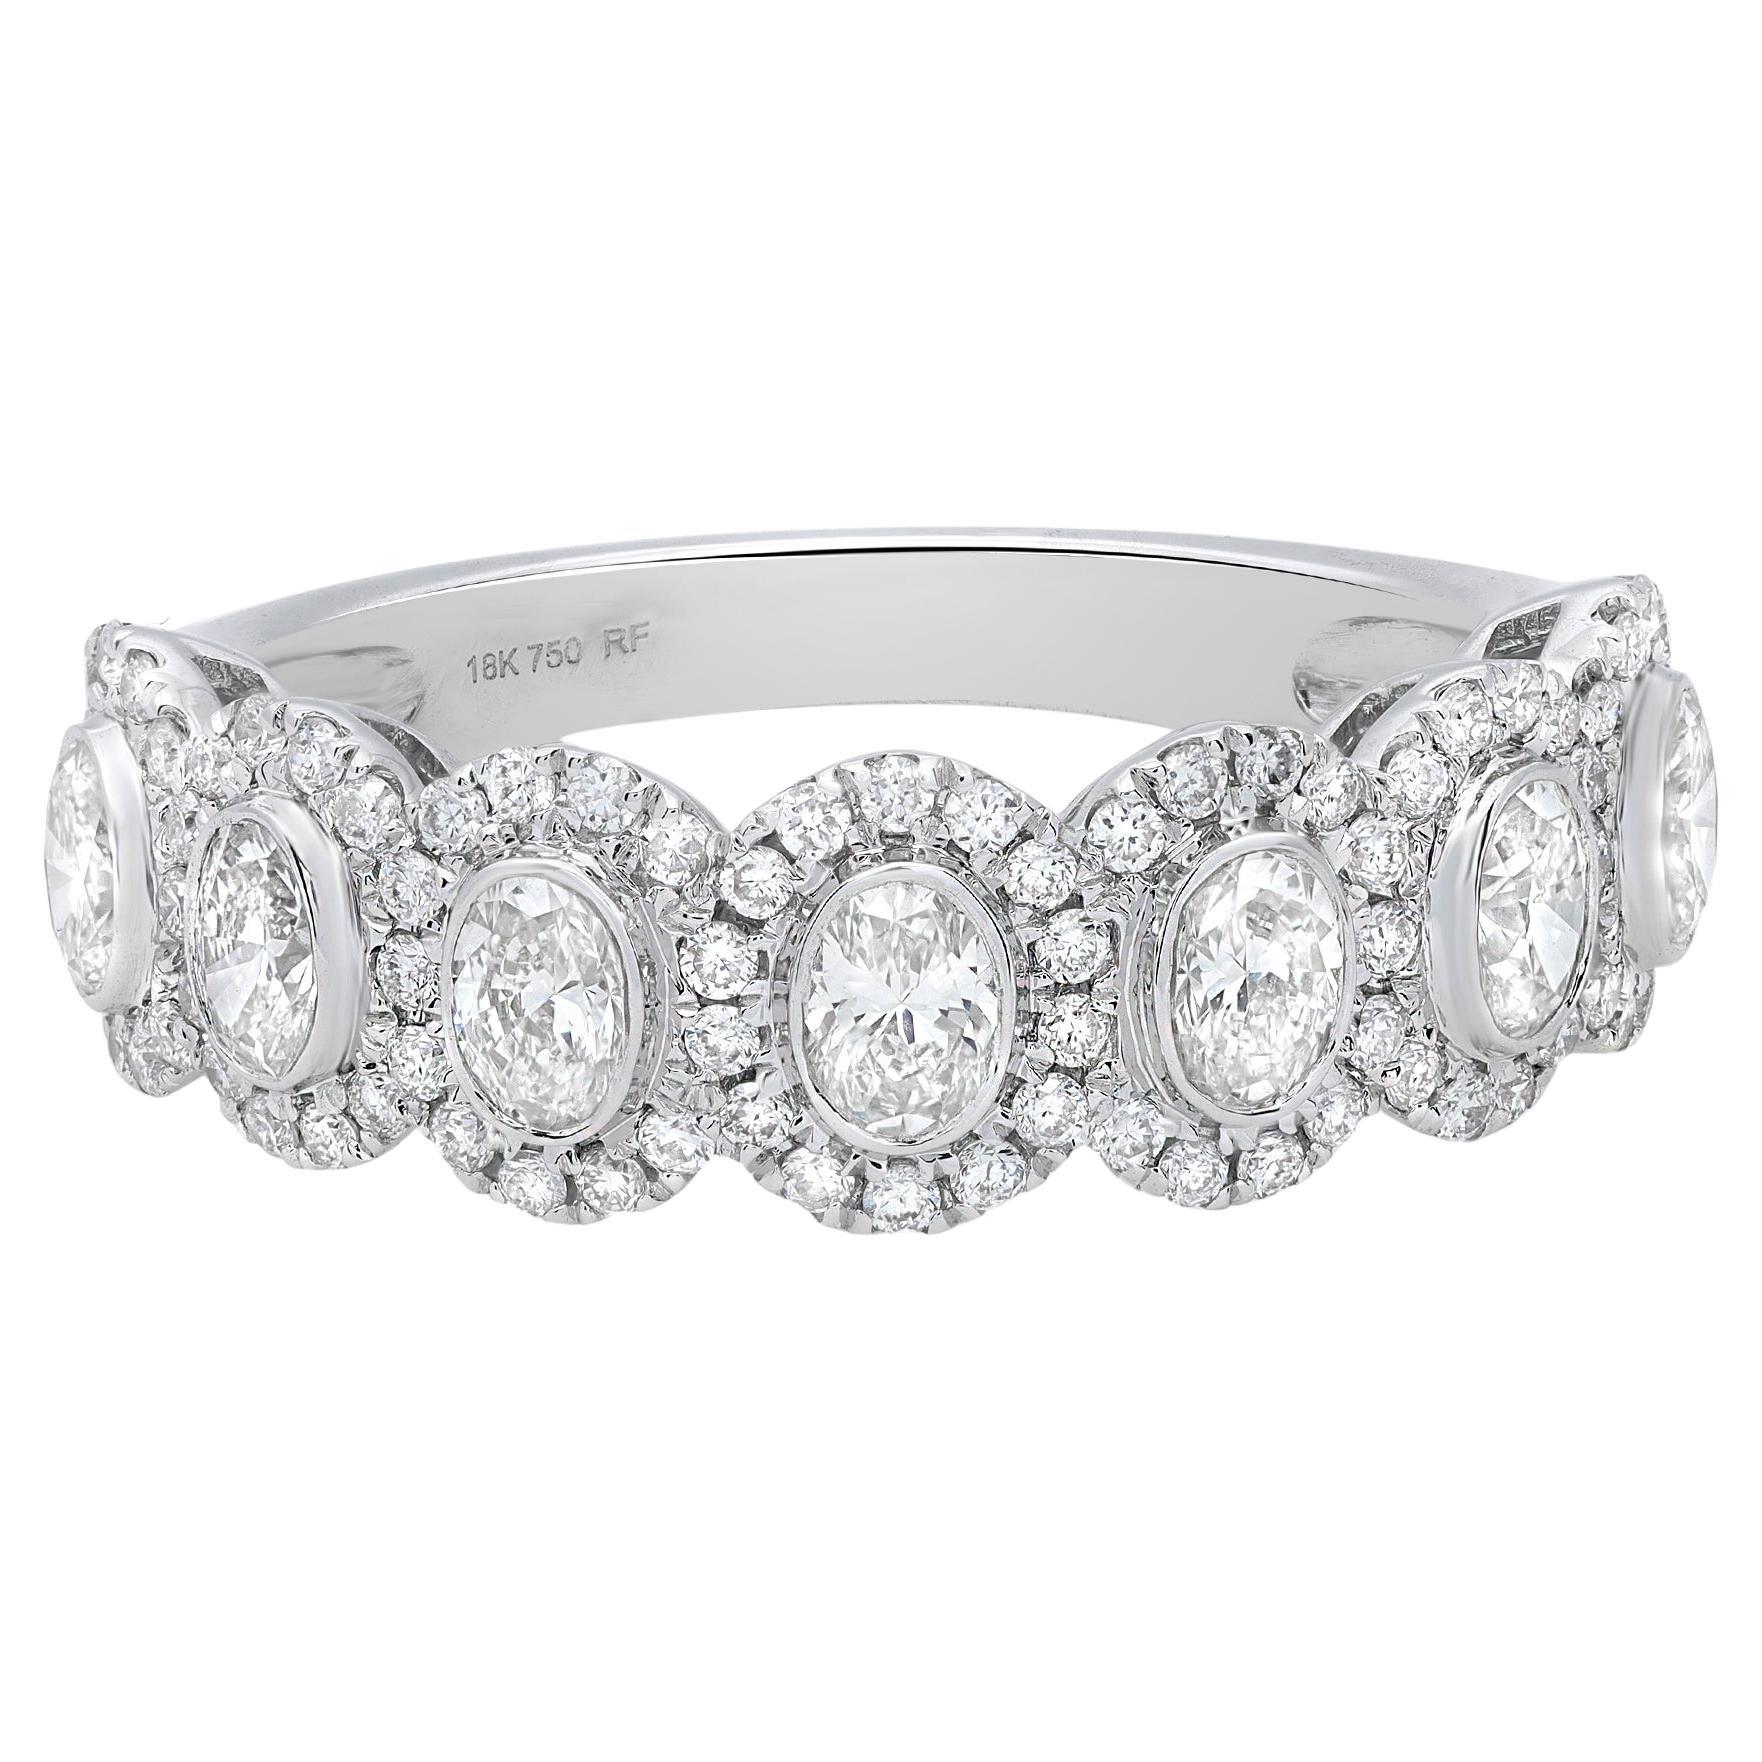 1.33Cttw Oval Cut Diamond Halo Wedding Band Ring 18K White Gold Size 6.5